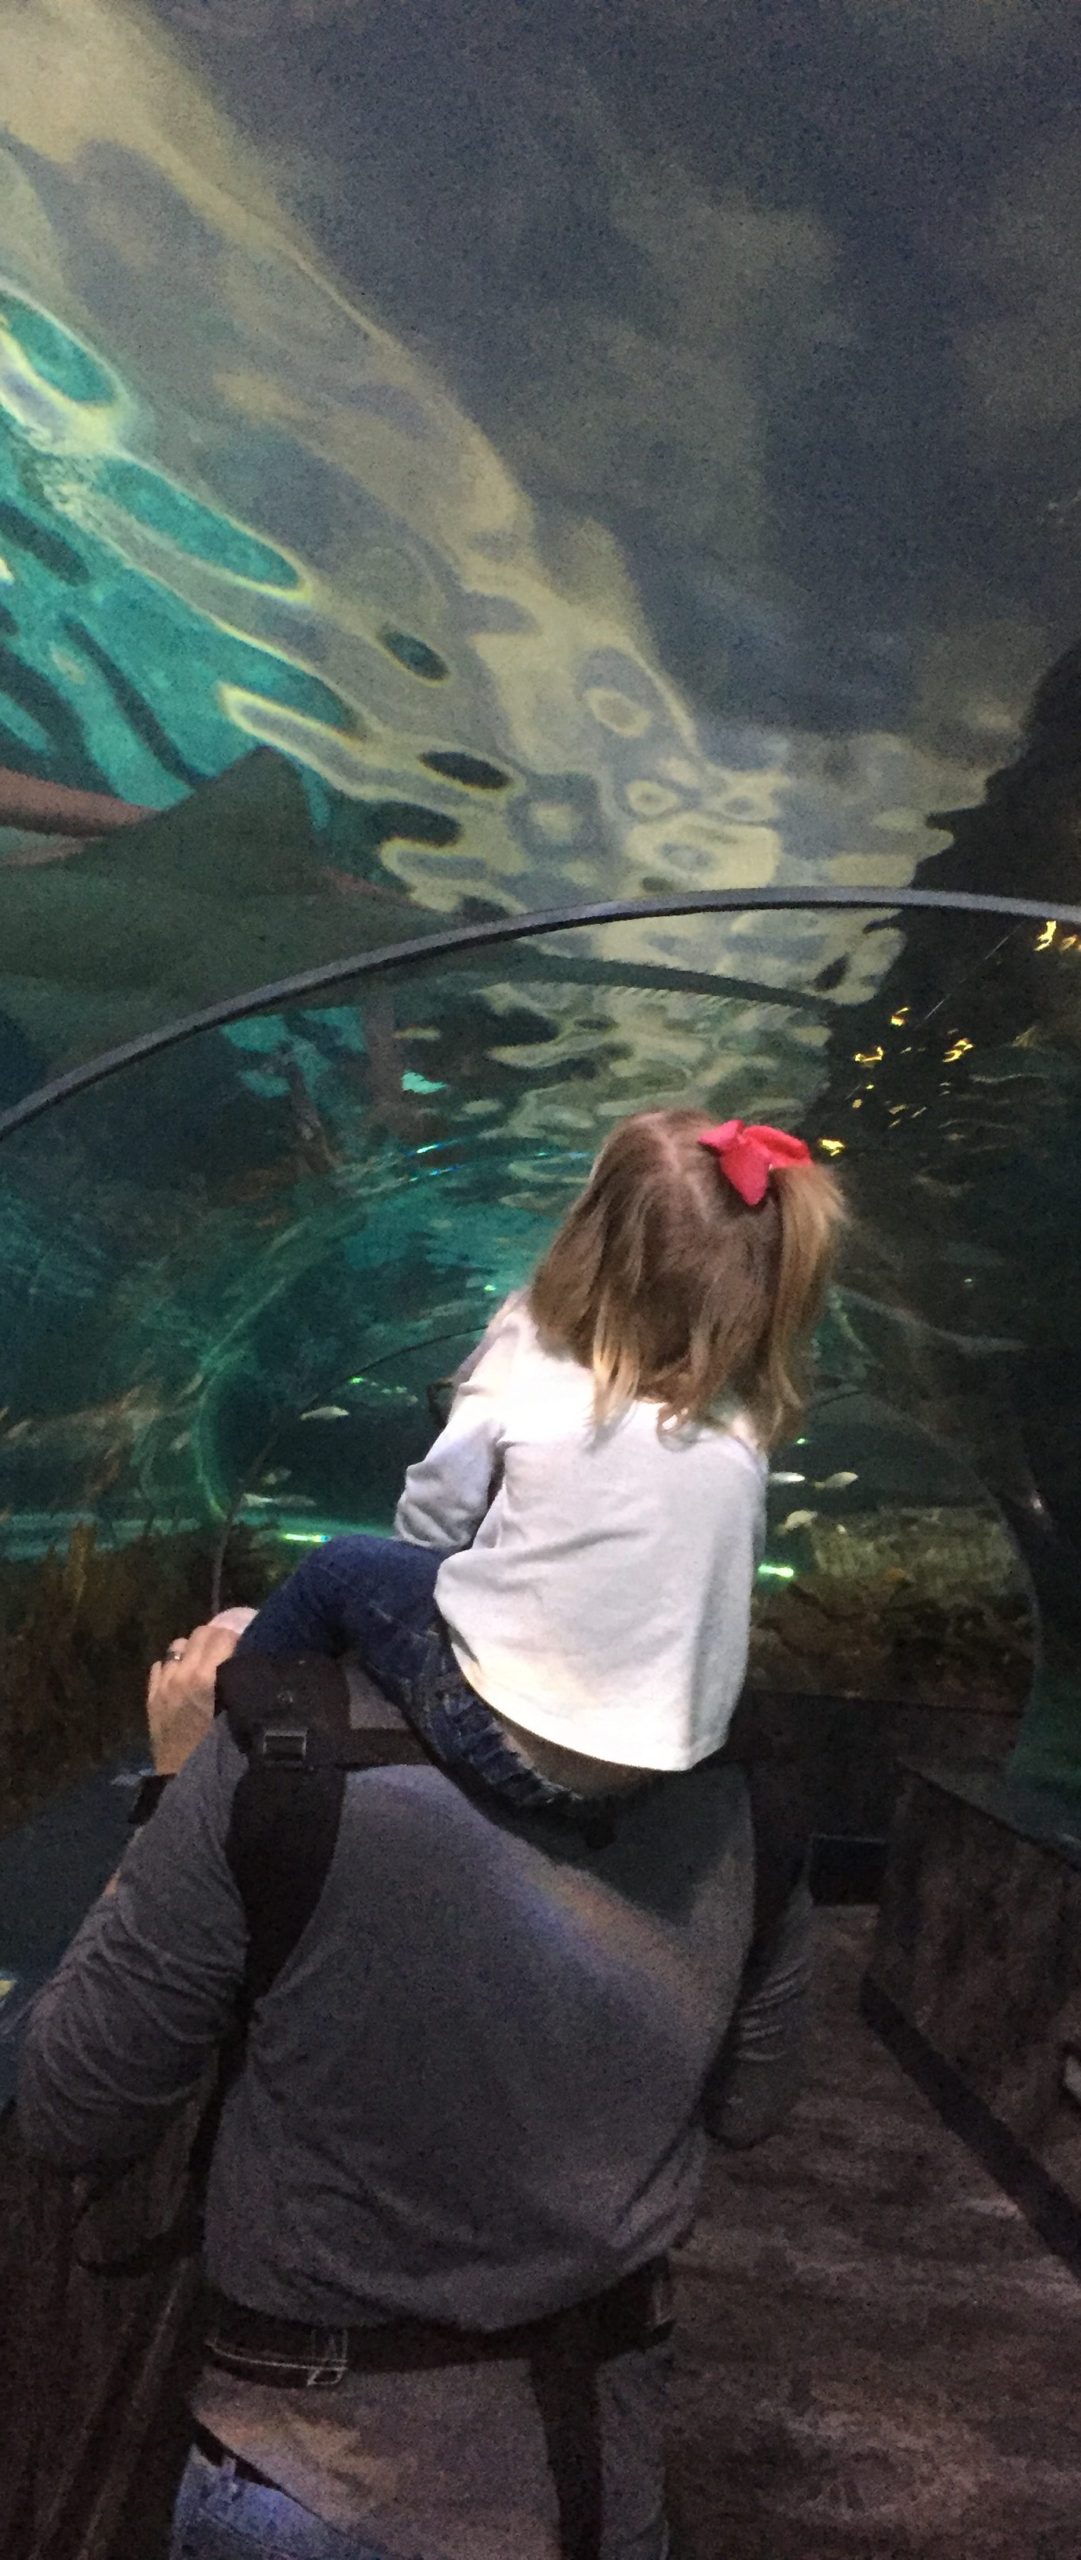 Explore under the sea as a family at the aquarium. 